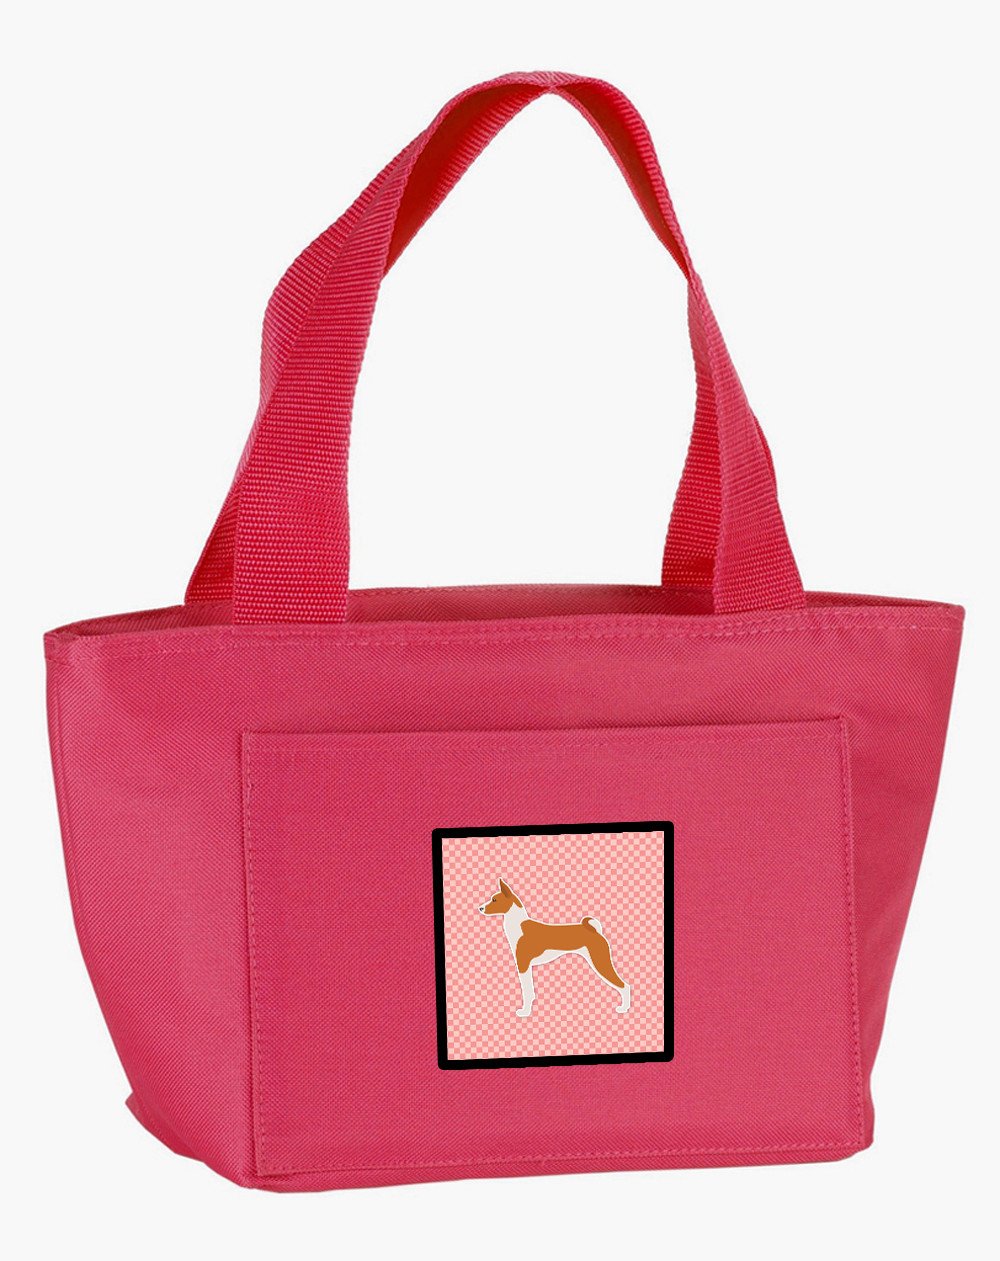 Basenji Checkerboard Pink Lunch Bag BB3674PK-8808 by Caroline's Treasures